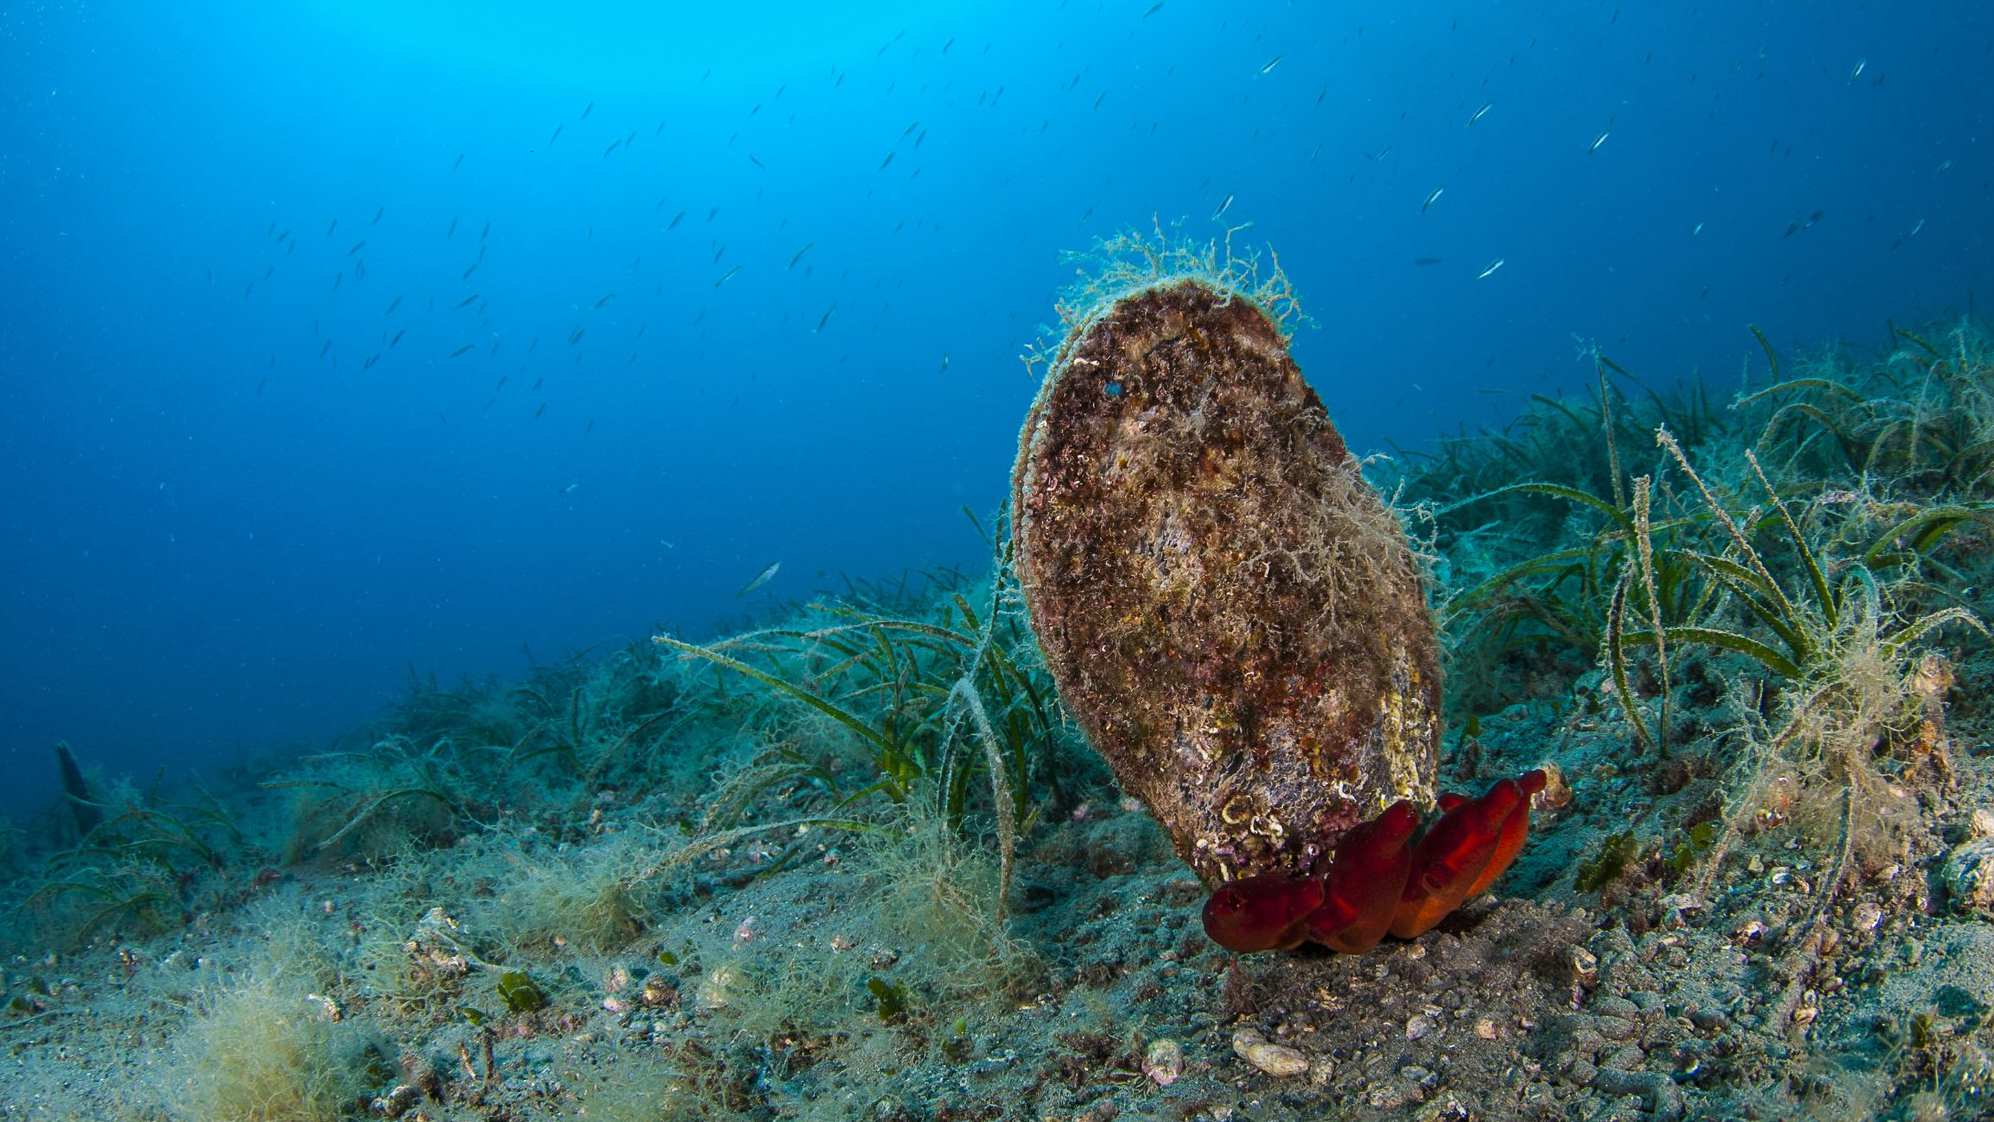 New parasite kills giant clam species in Mediterranean - CGTN